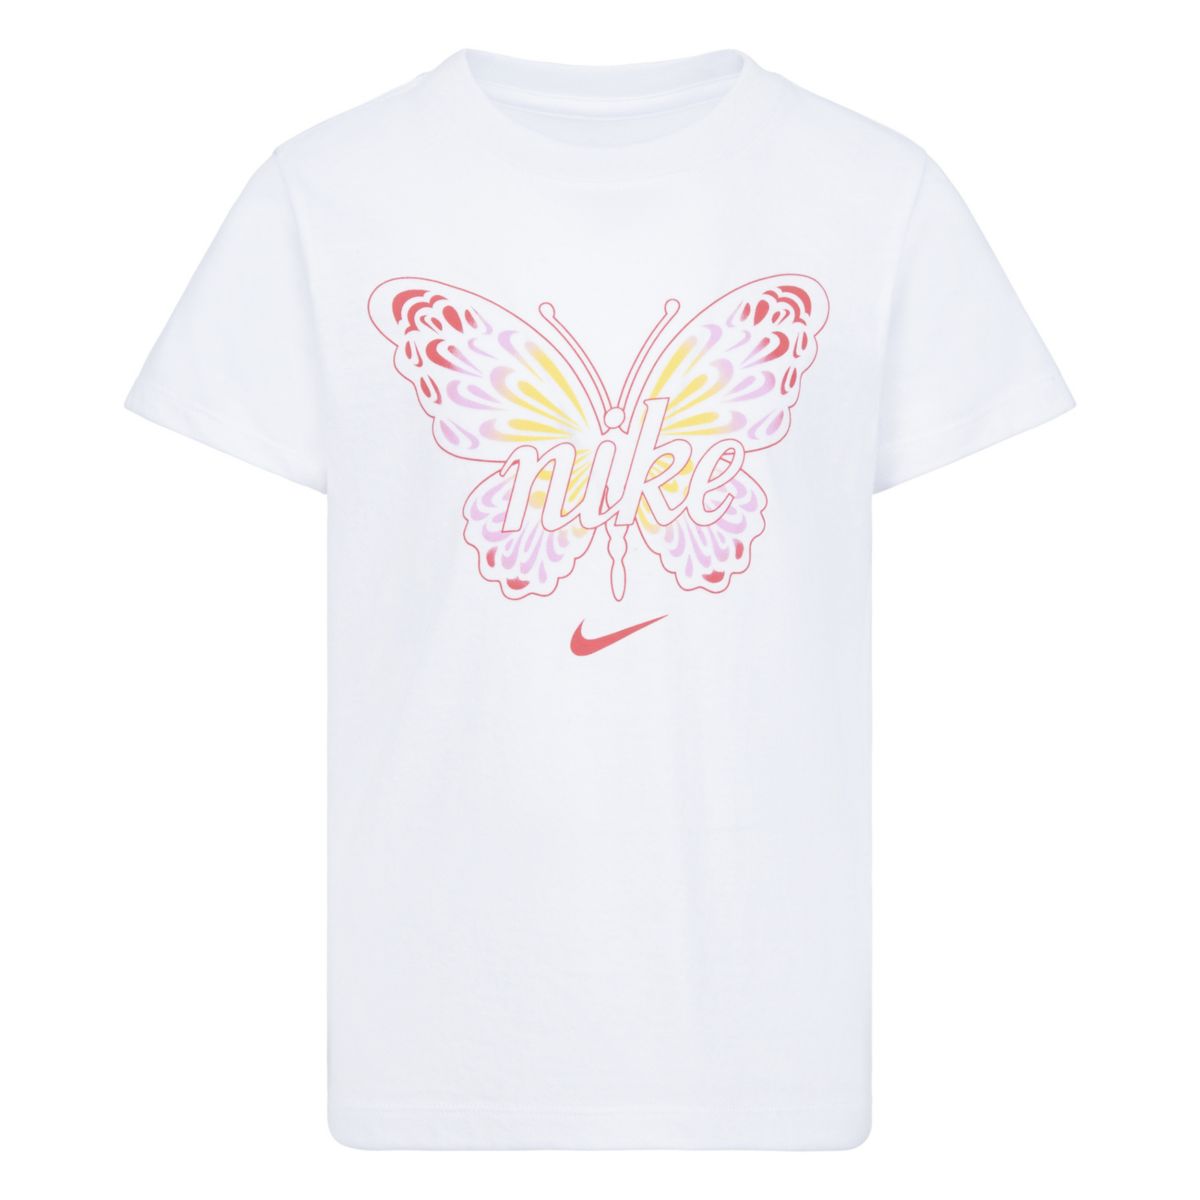 Girls 4-6x Nike Butterfly Short Sleeve T-shirt Nike